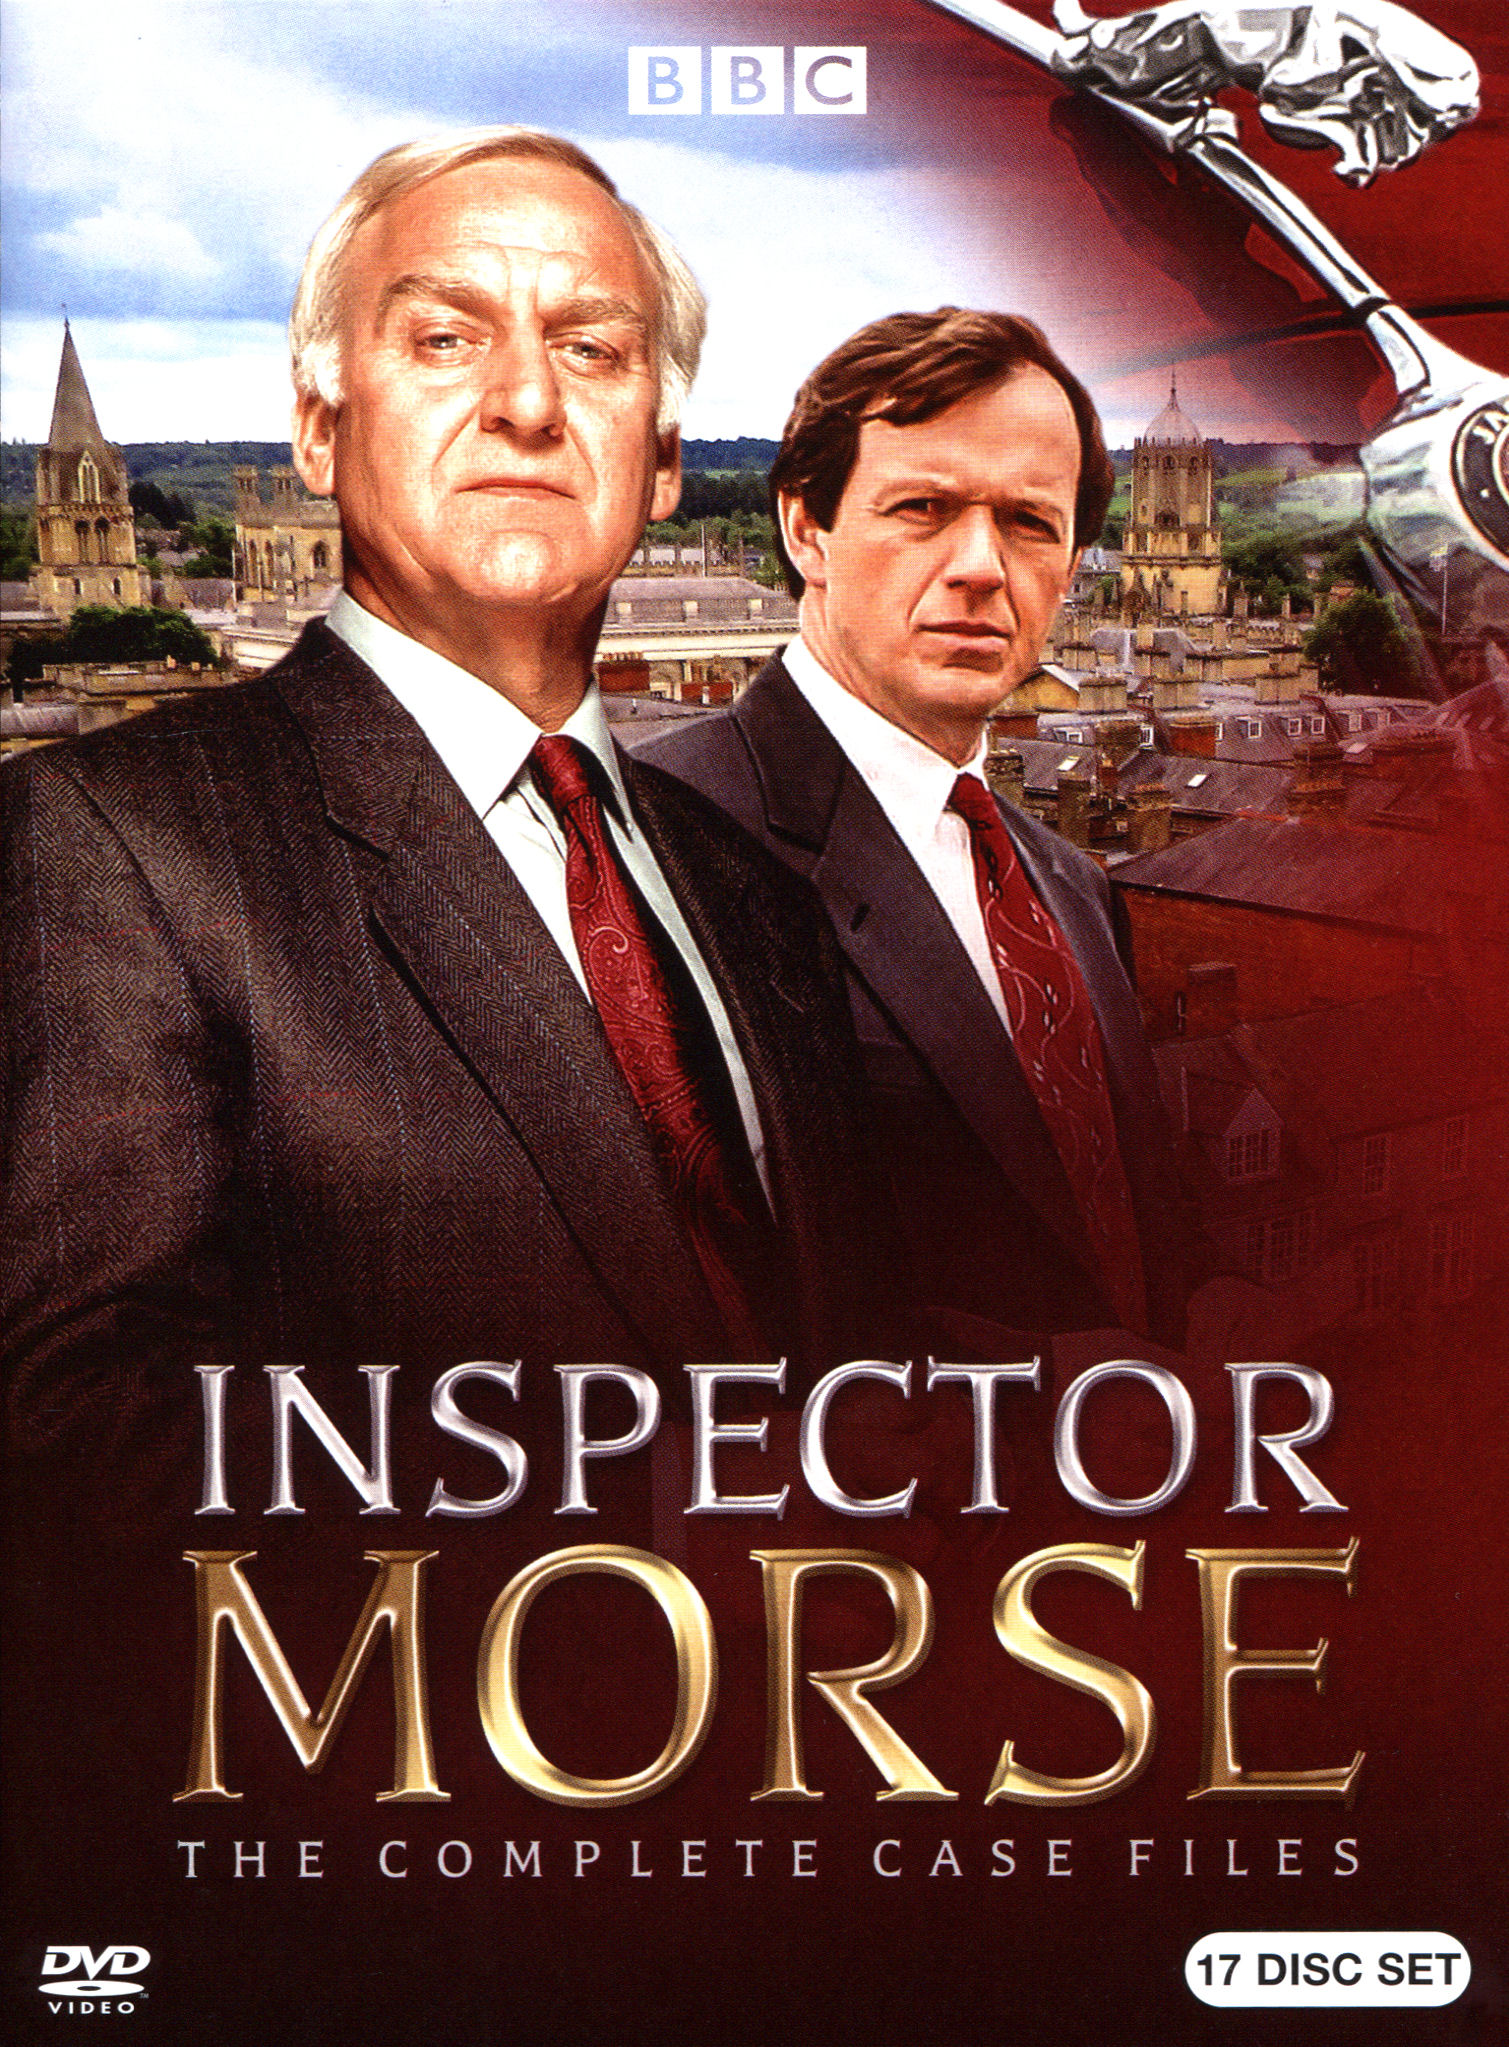 Inspector Morse DvD 4